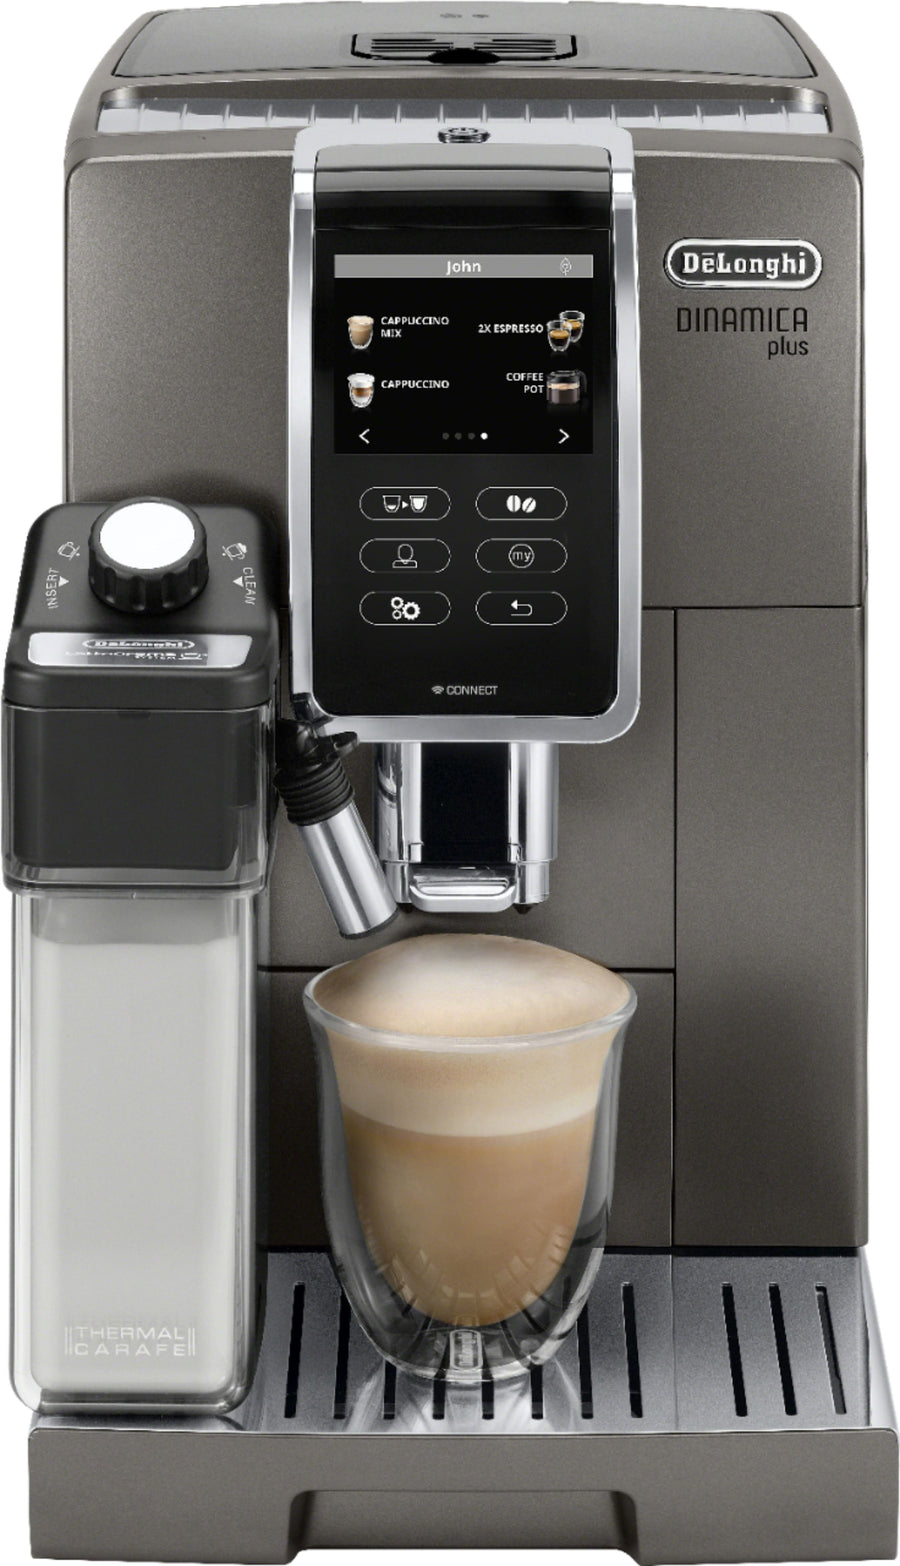 De'Longhi - Dinamica Plus Fully Automatic Espresso Machine with Built-in Grinder - Titanium_0